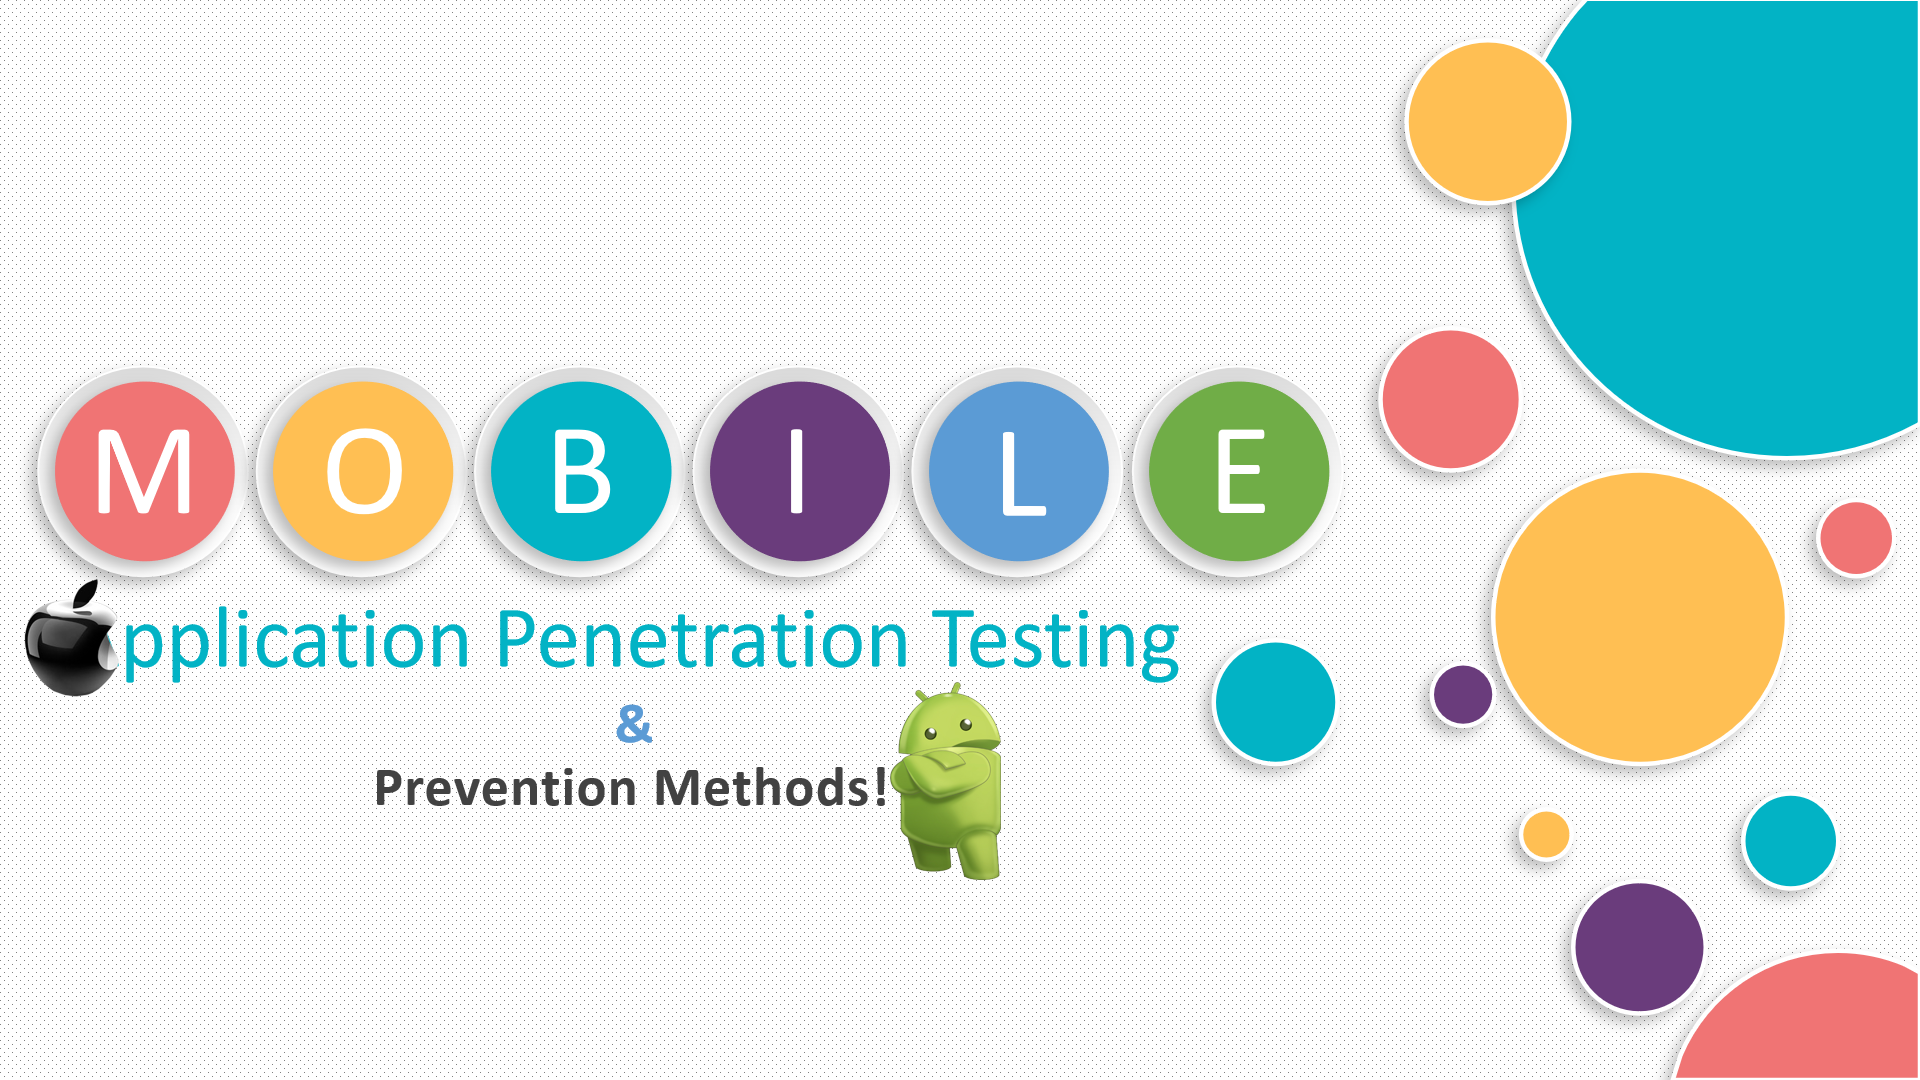 Mobile application penetration testing